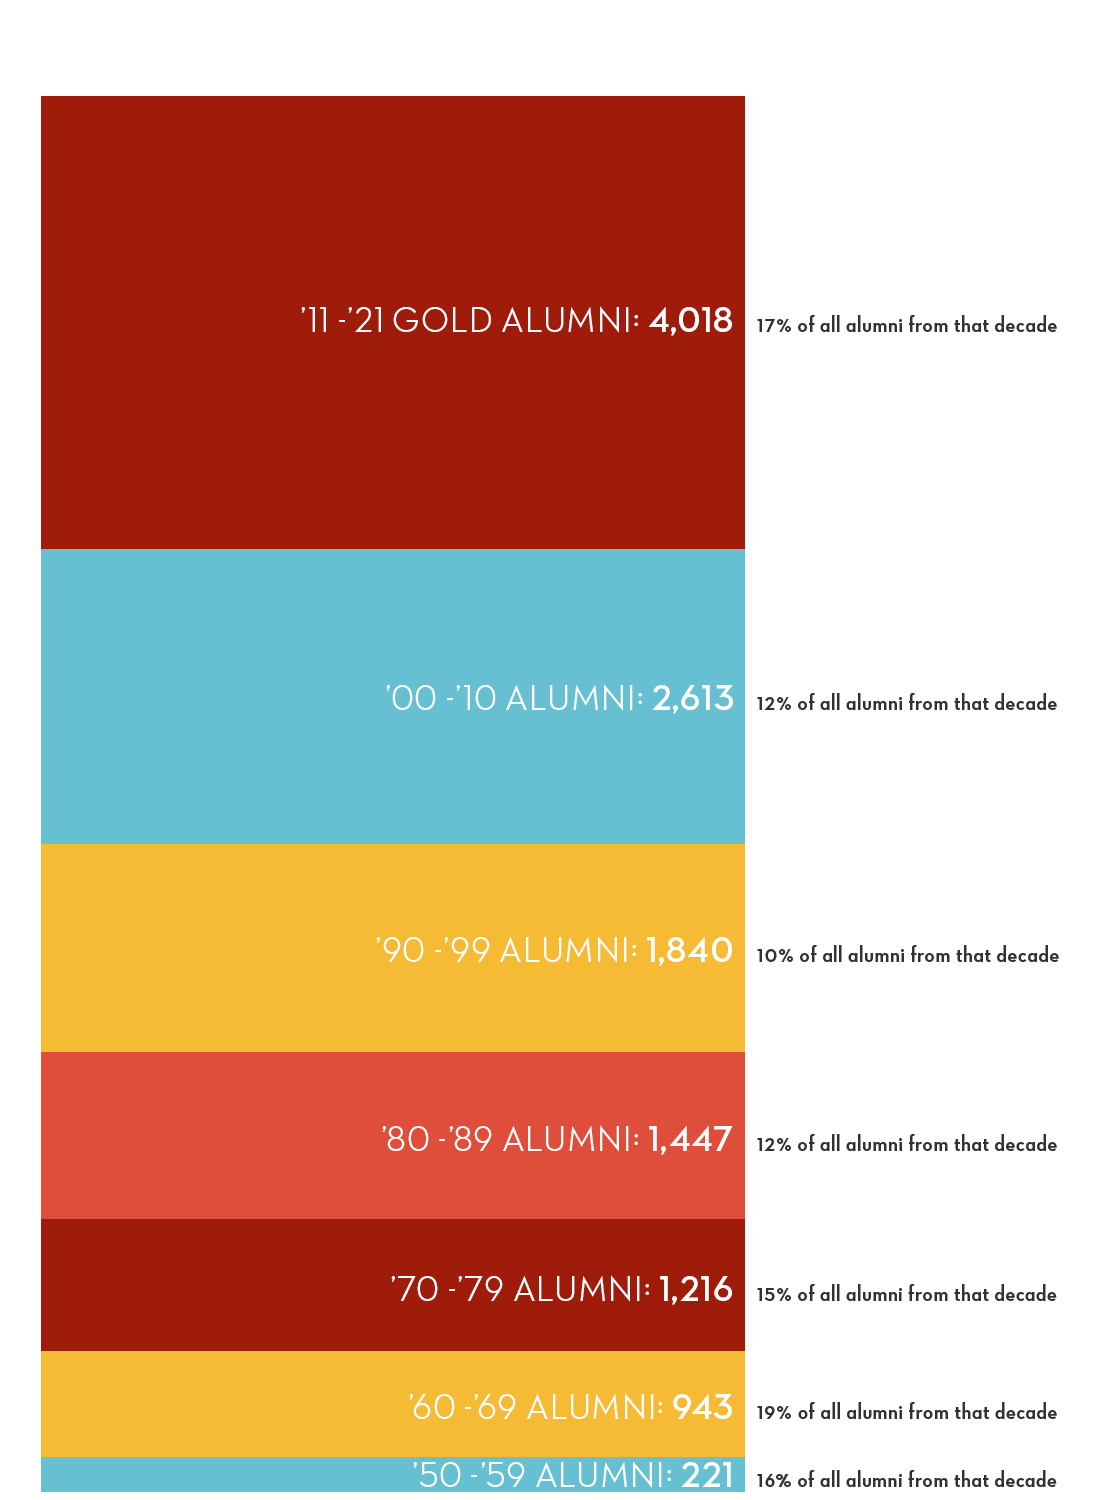 Alumni Chart